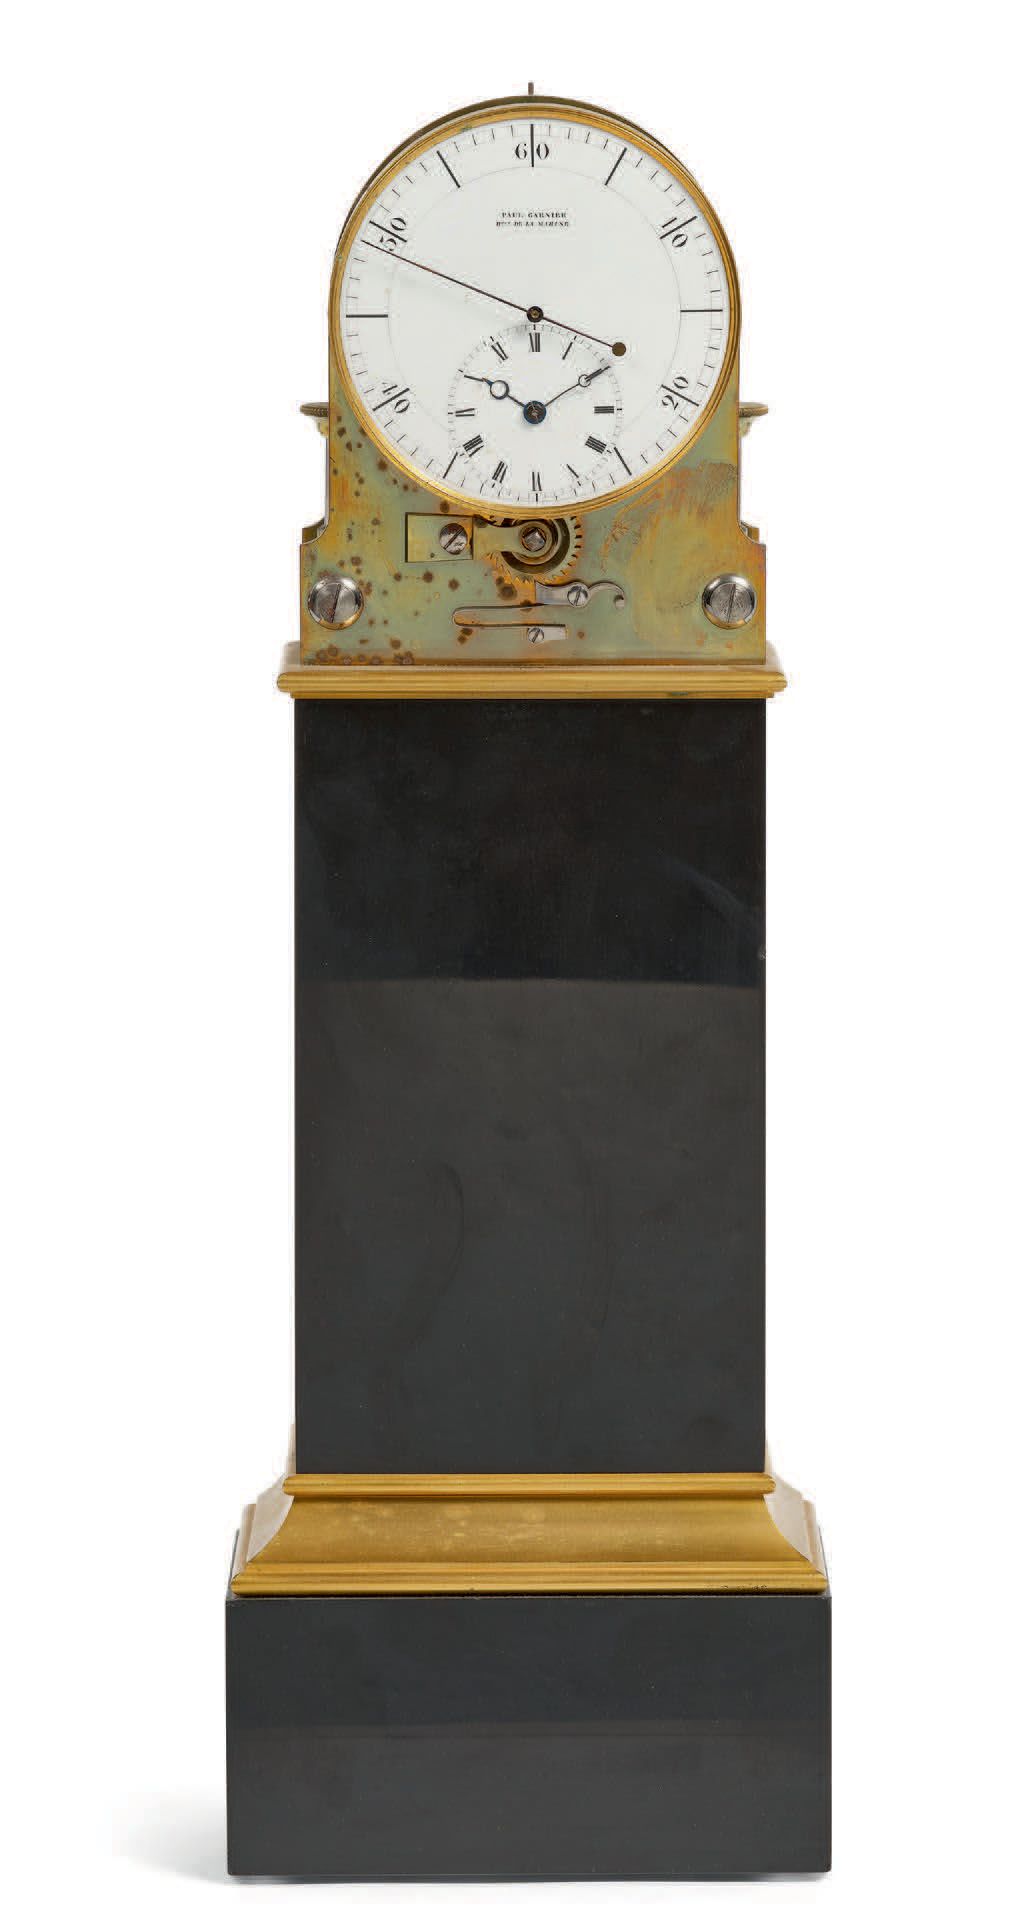 PAUL GARNIER, Horloger de la Marine - Milieu XIXe siècle PAUL GARNIER, Watchmake&hellip;